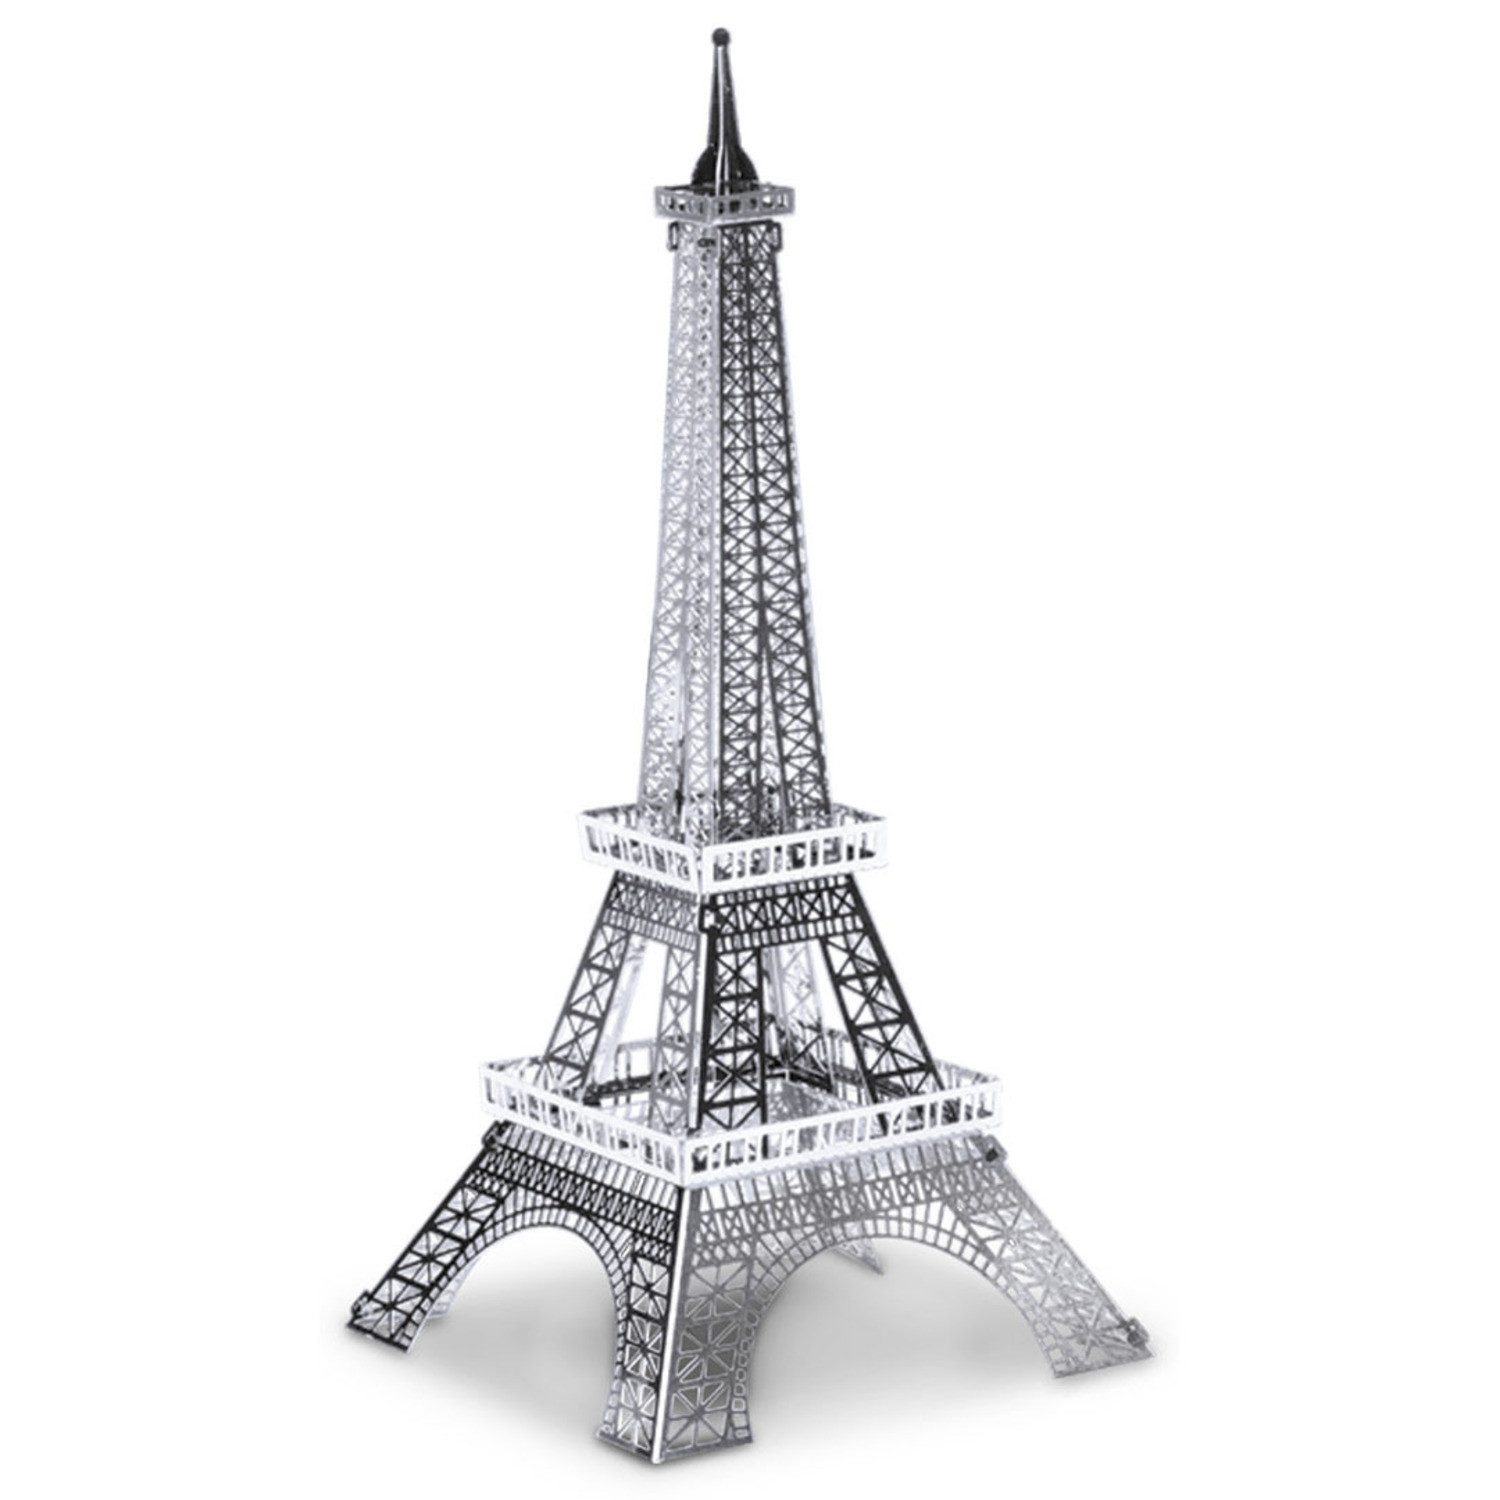 Invento Modellbausatz Eiffelturm 3D Modellbausatz aus Metall